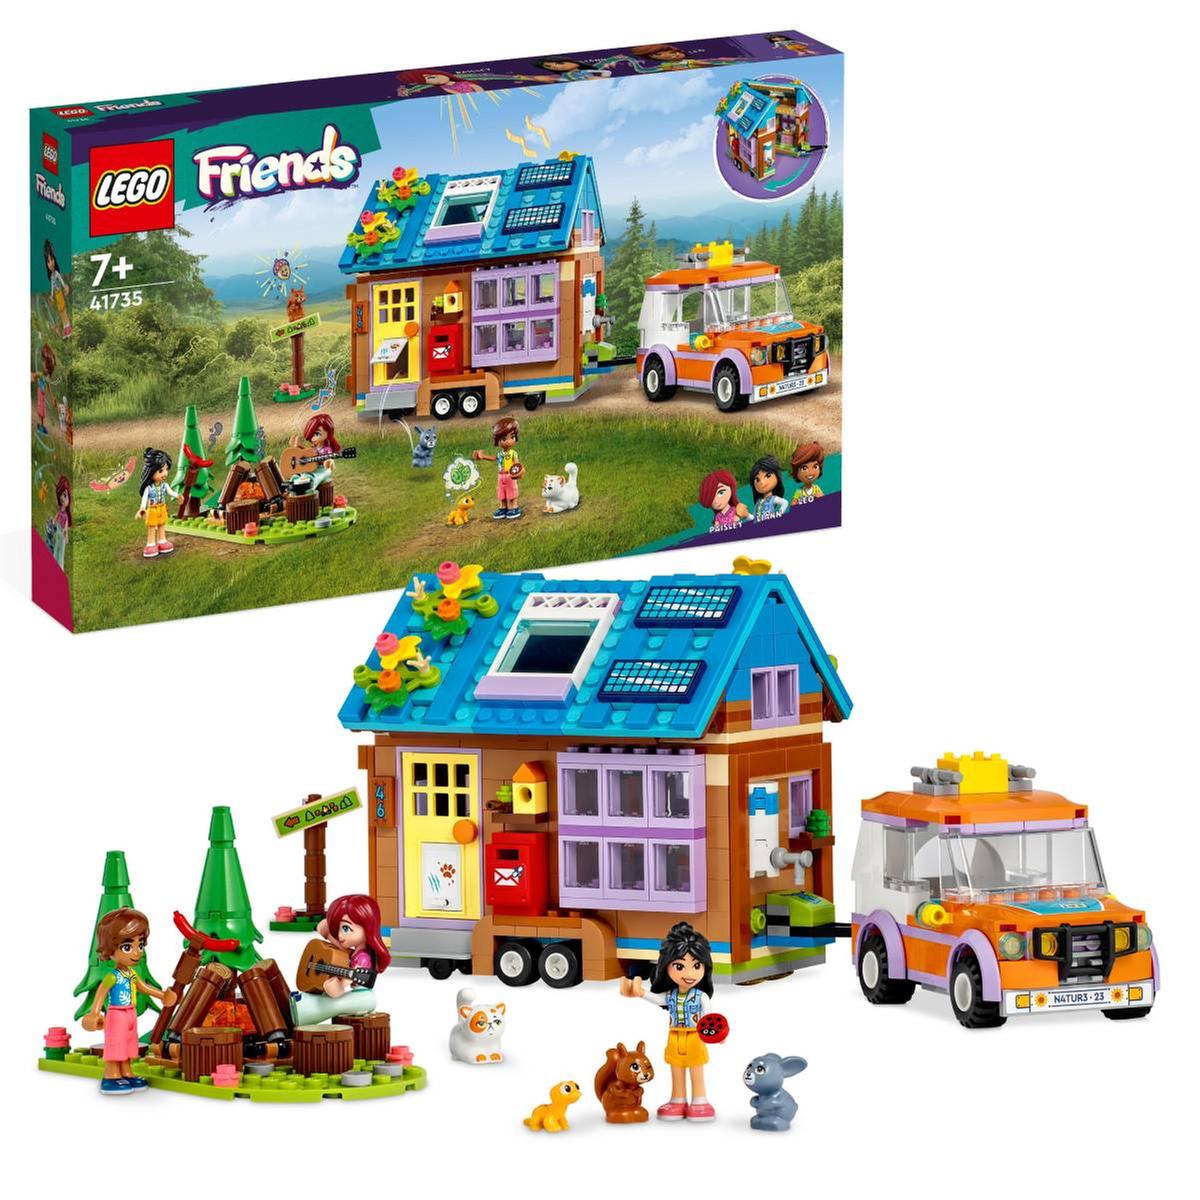 LEGO Friends - Casita con ruedas - 41735 | Lego Friends | Toys"R"Us España